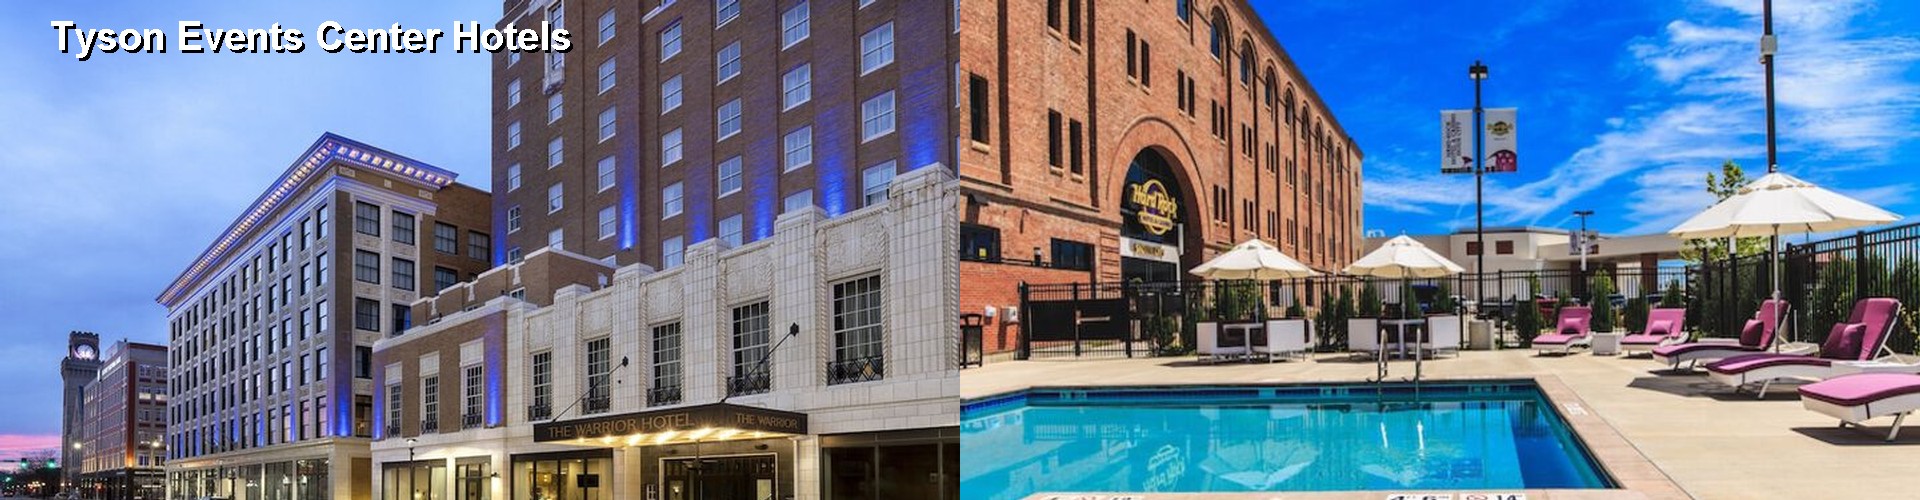 4 Best Hotels near Tyson Events Center